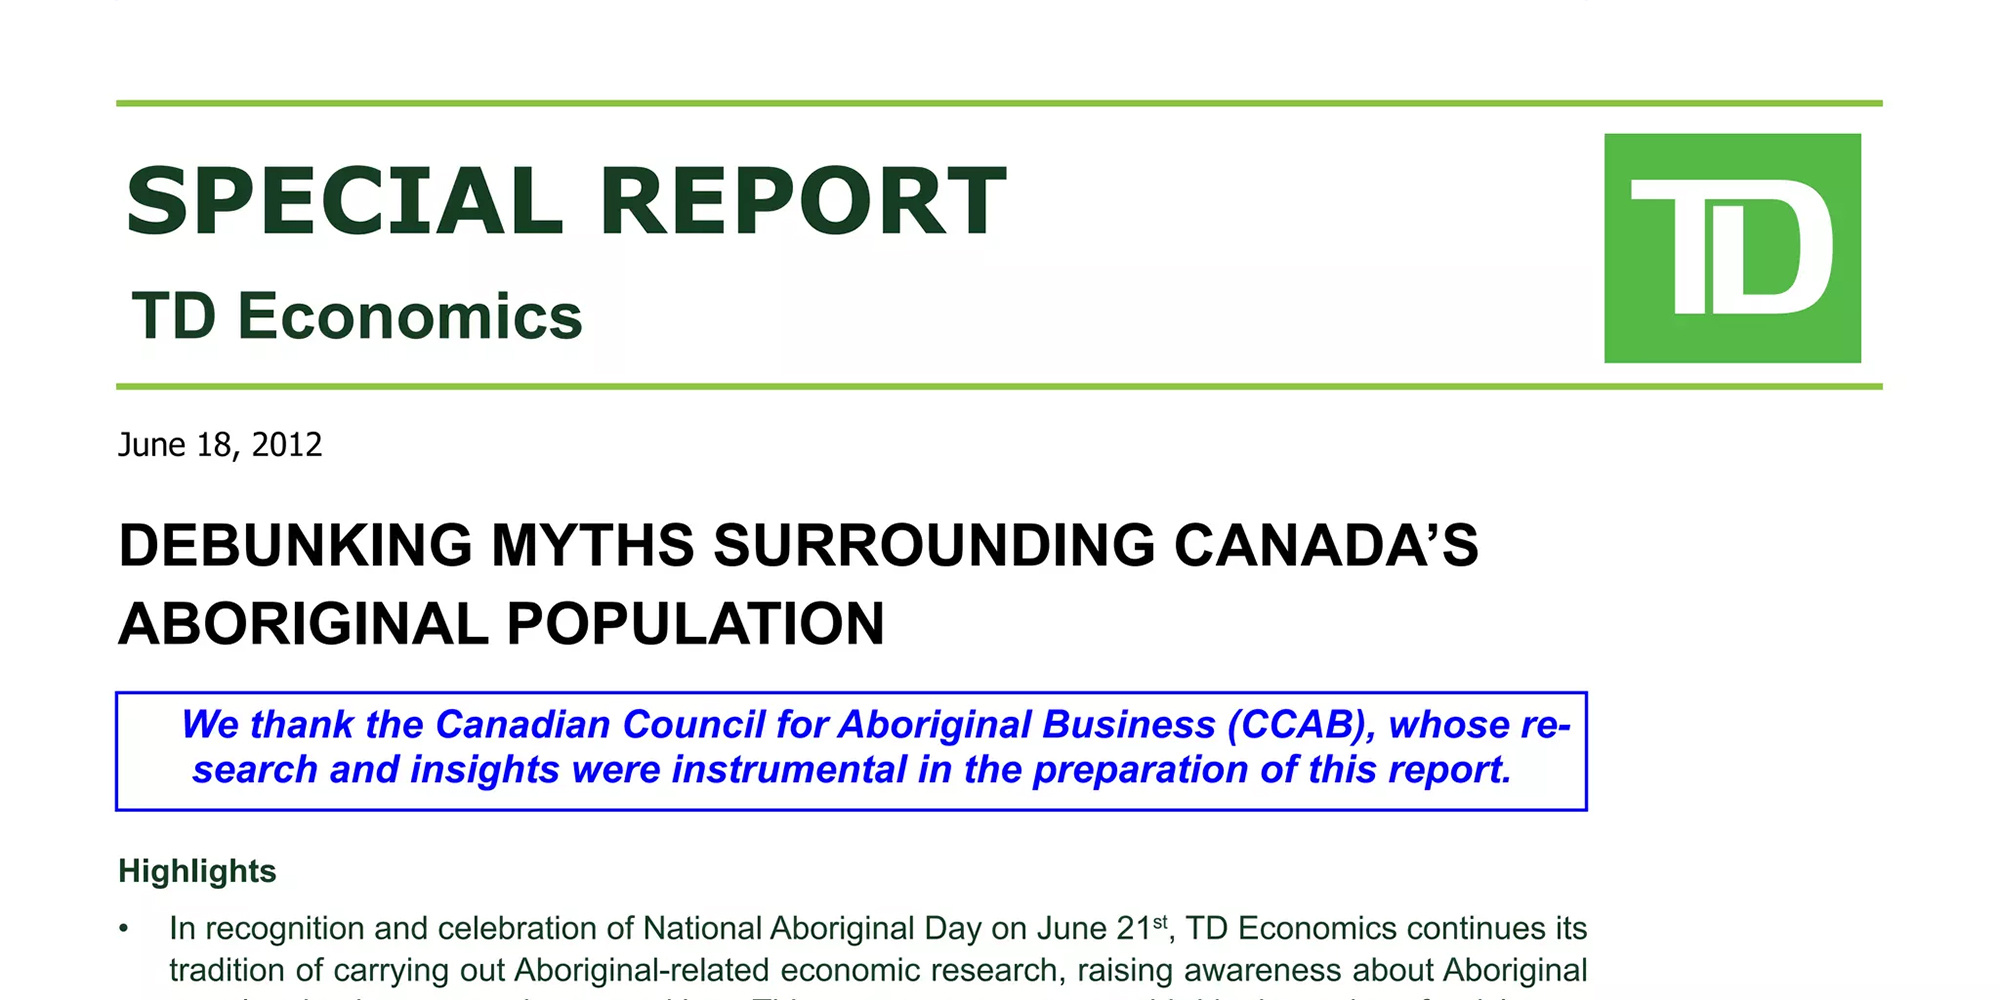 Debunking Myths Surrounding Canada's Aboriginal Population